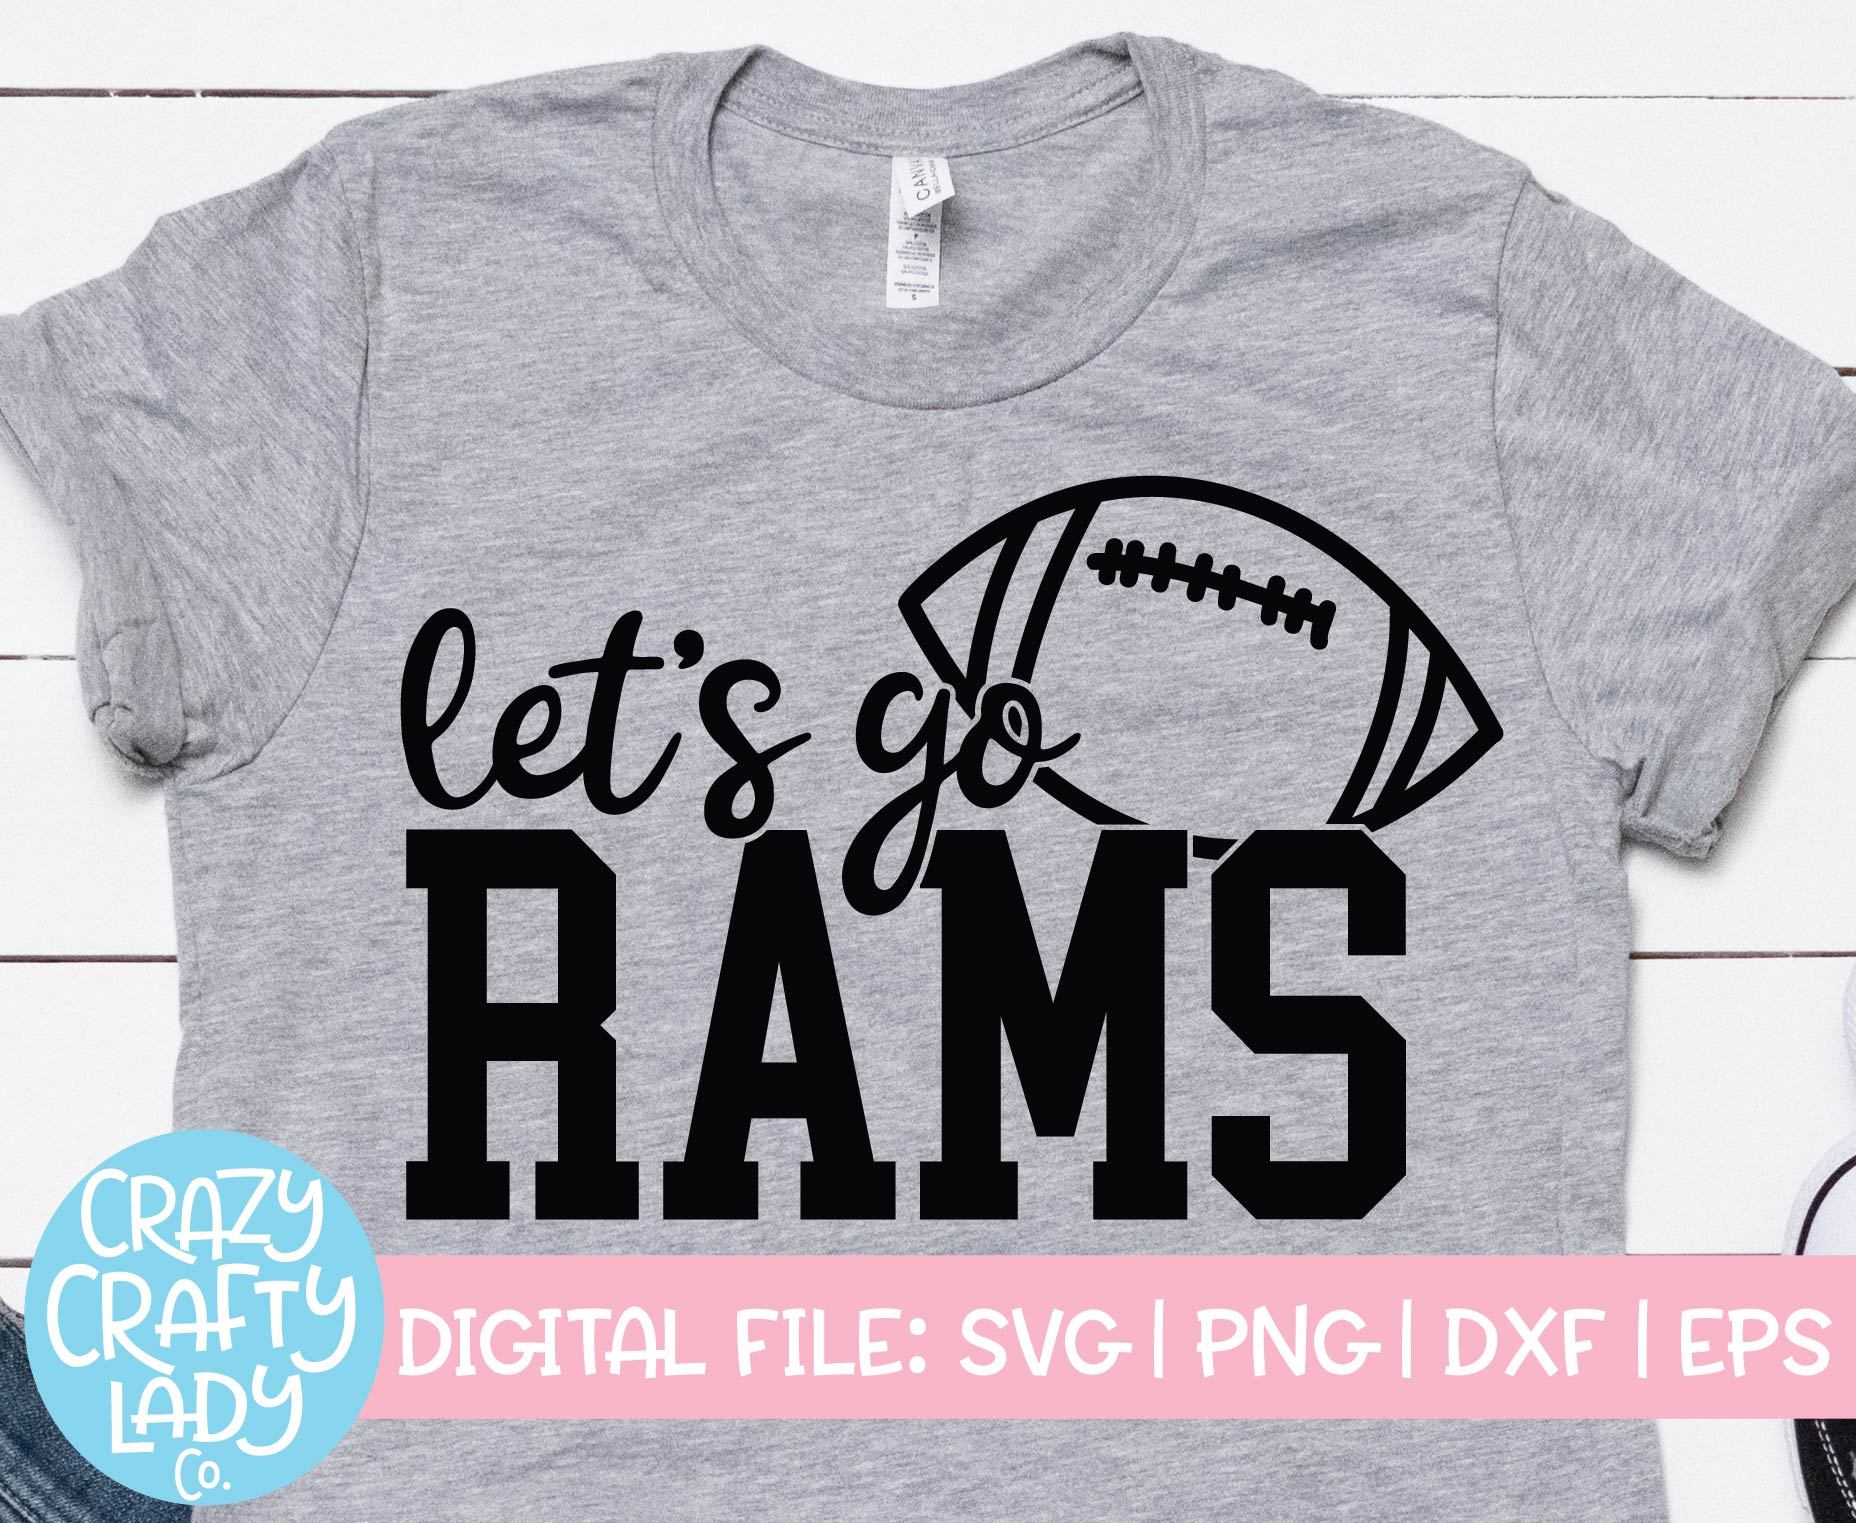 Let's Go Rams T-Shirt